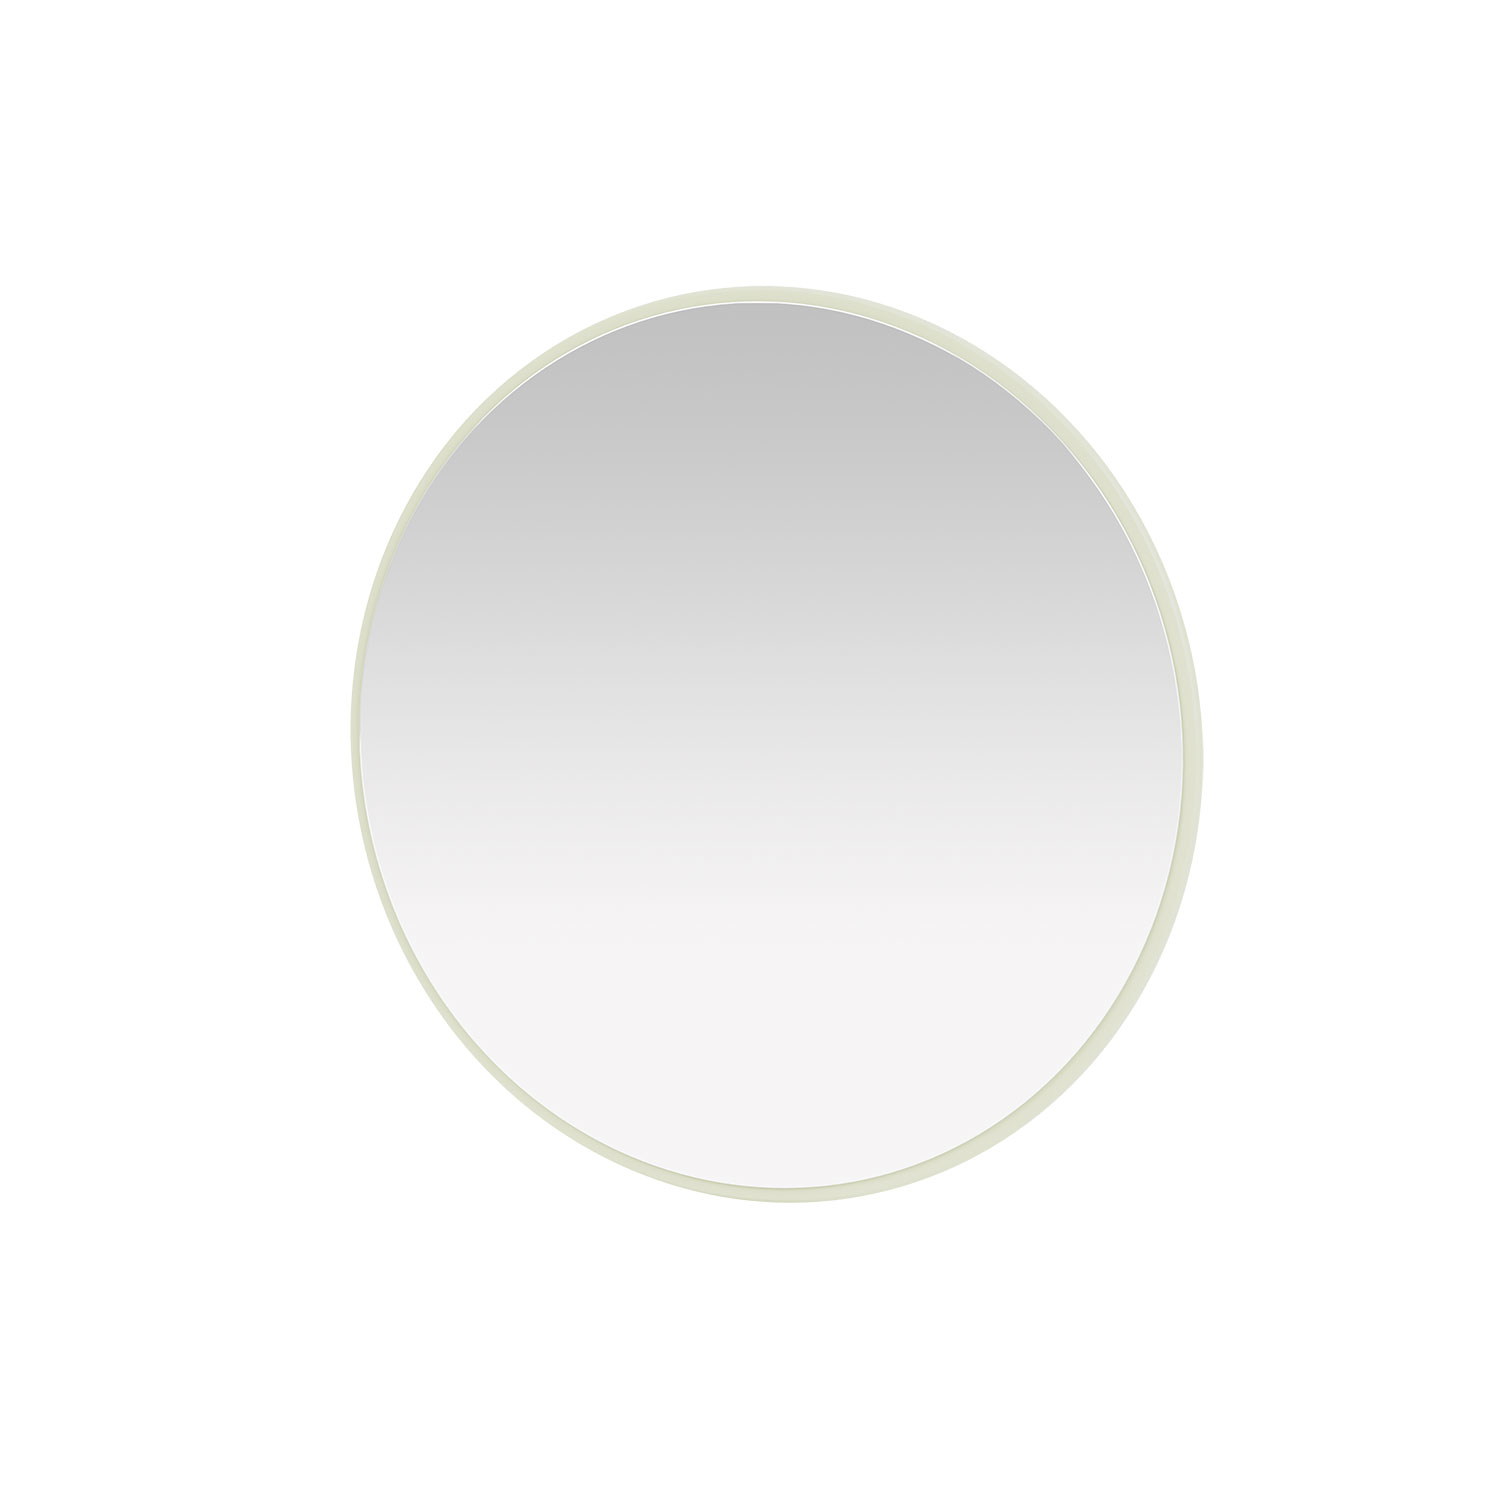 AROUND mirror, Pomelo